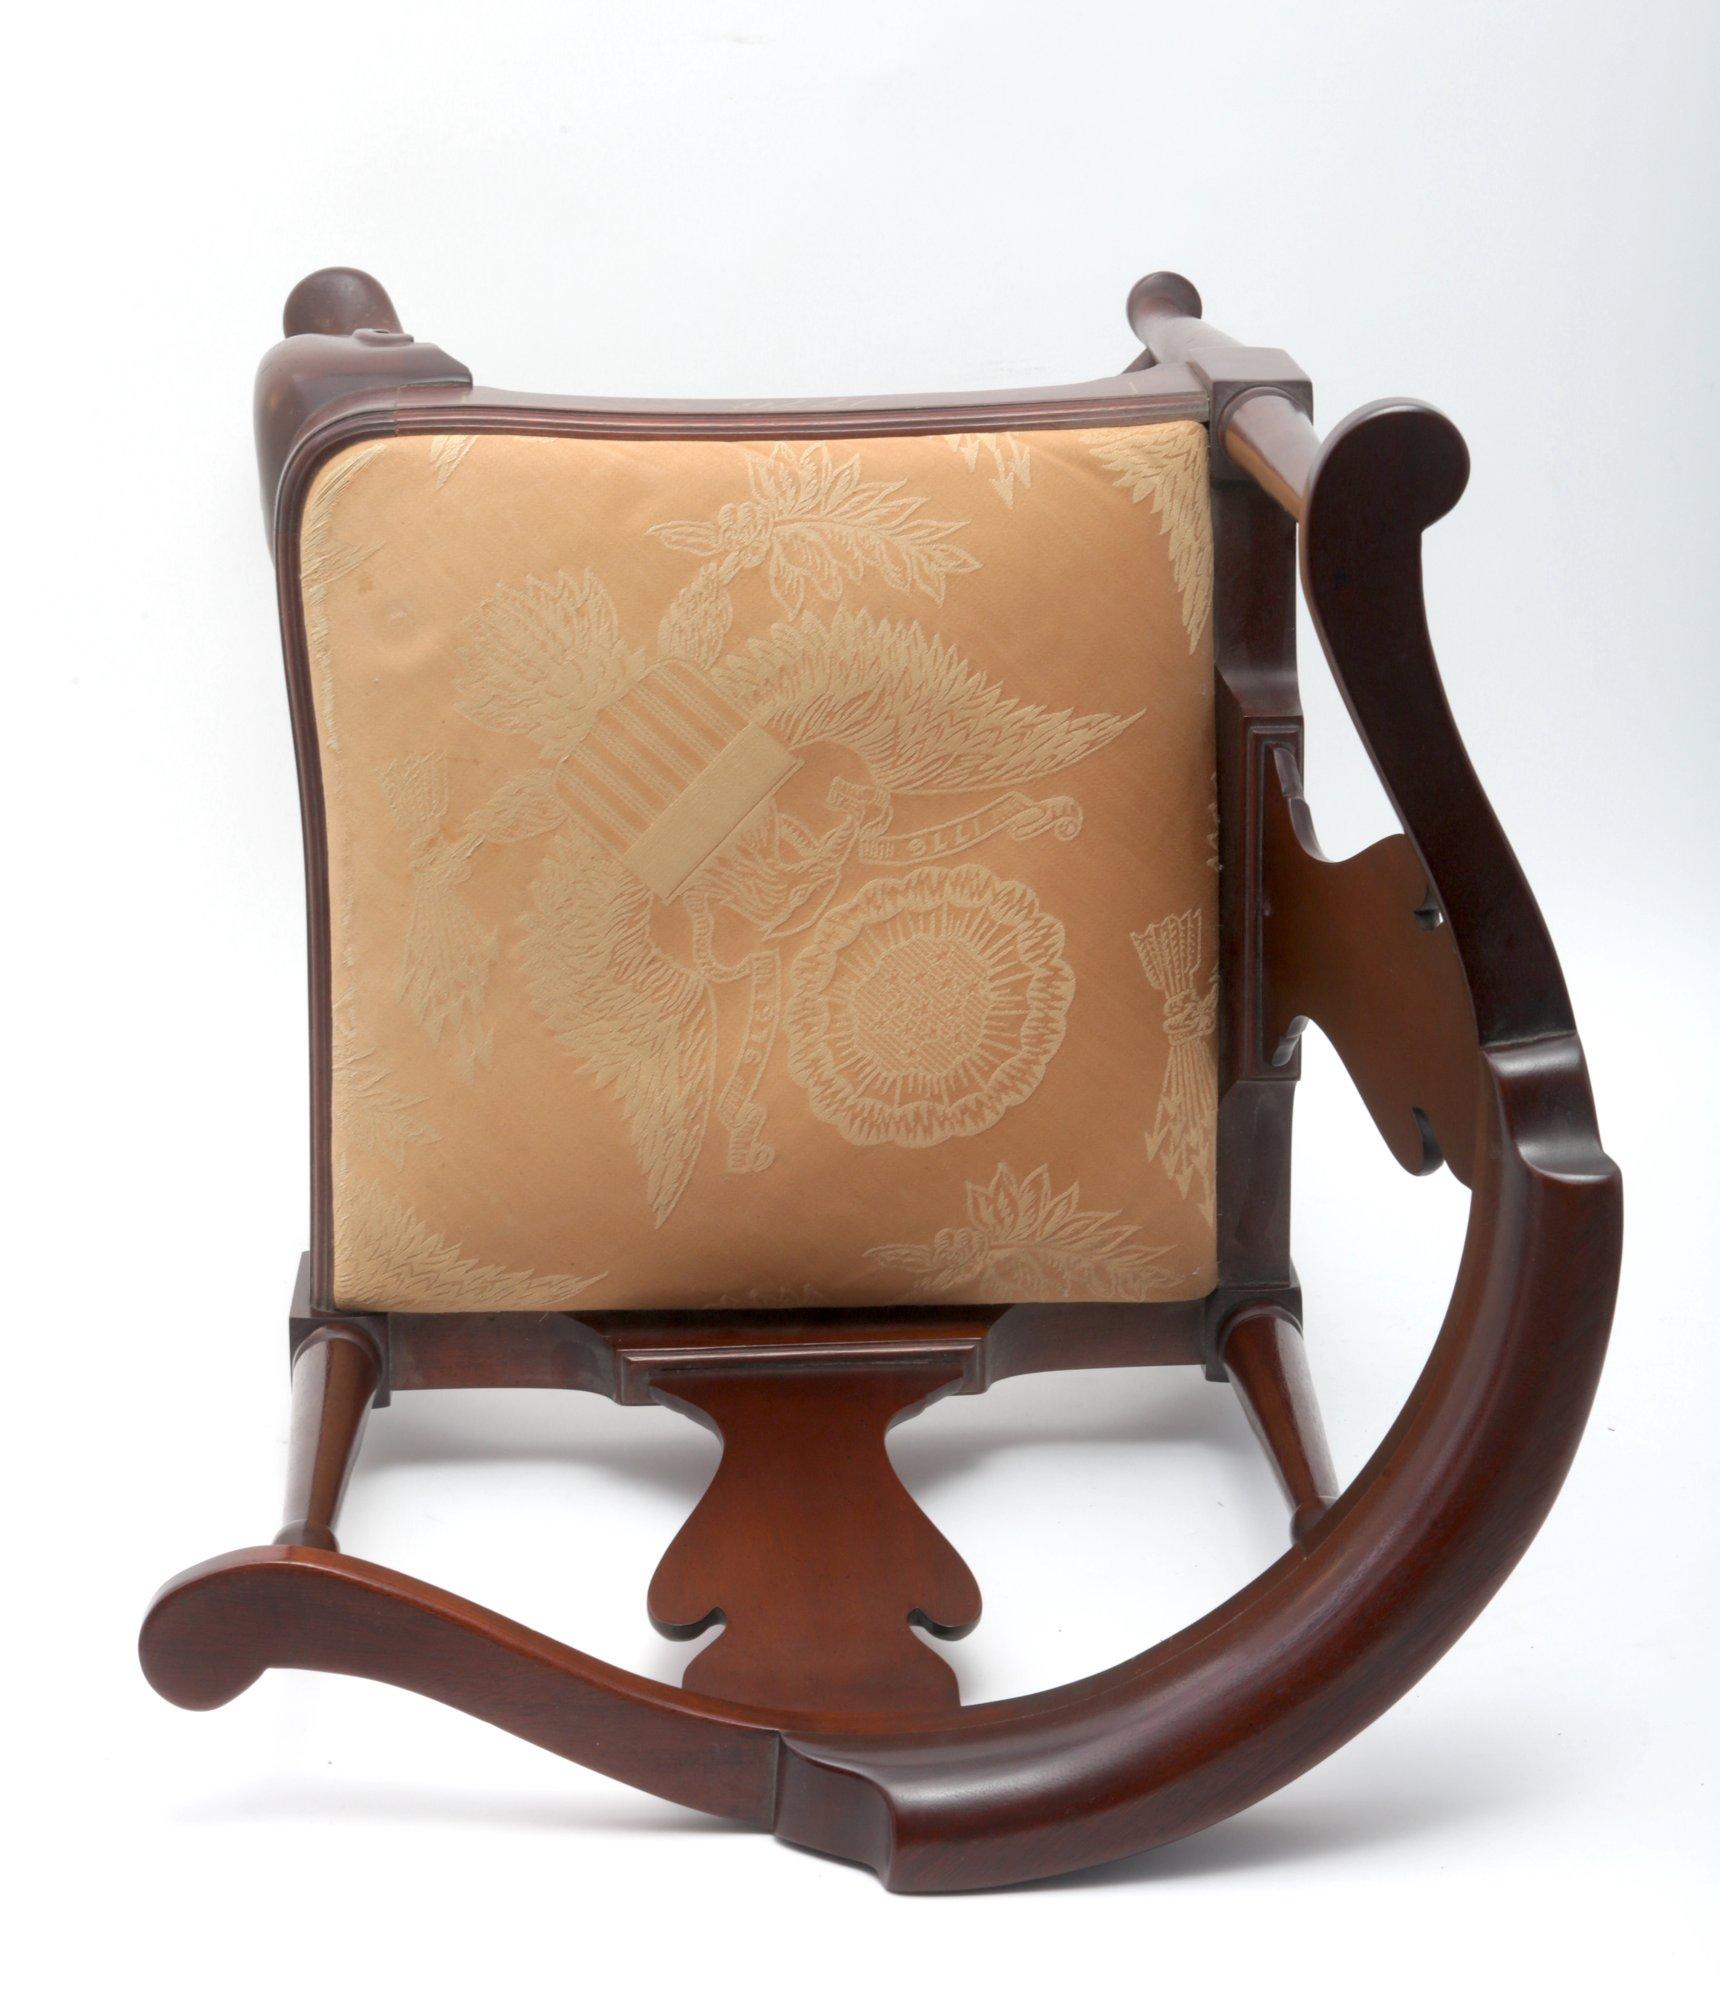 Cherrywood Corner/sword Back Chair-Bicentennial Markings